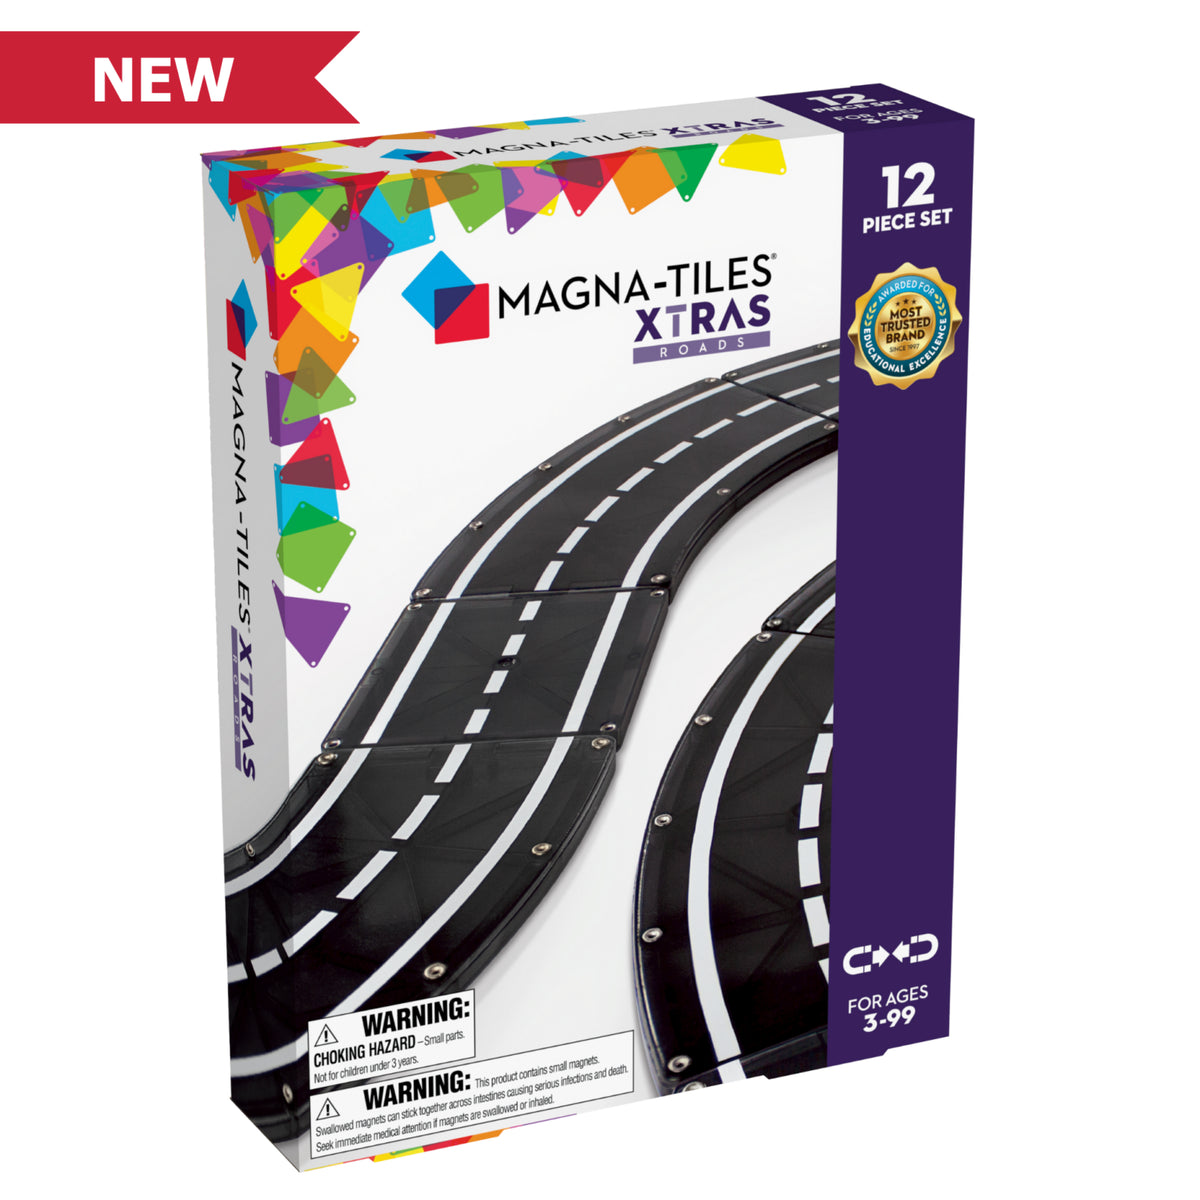 Magna-Tiles XTRAS Roads Cover